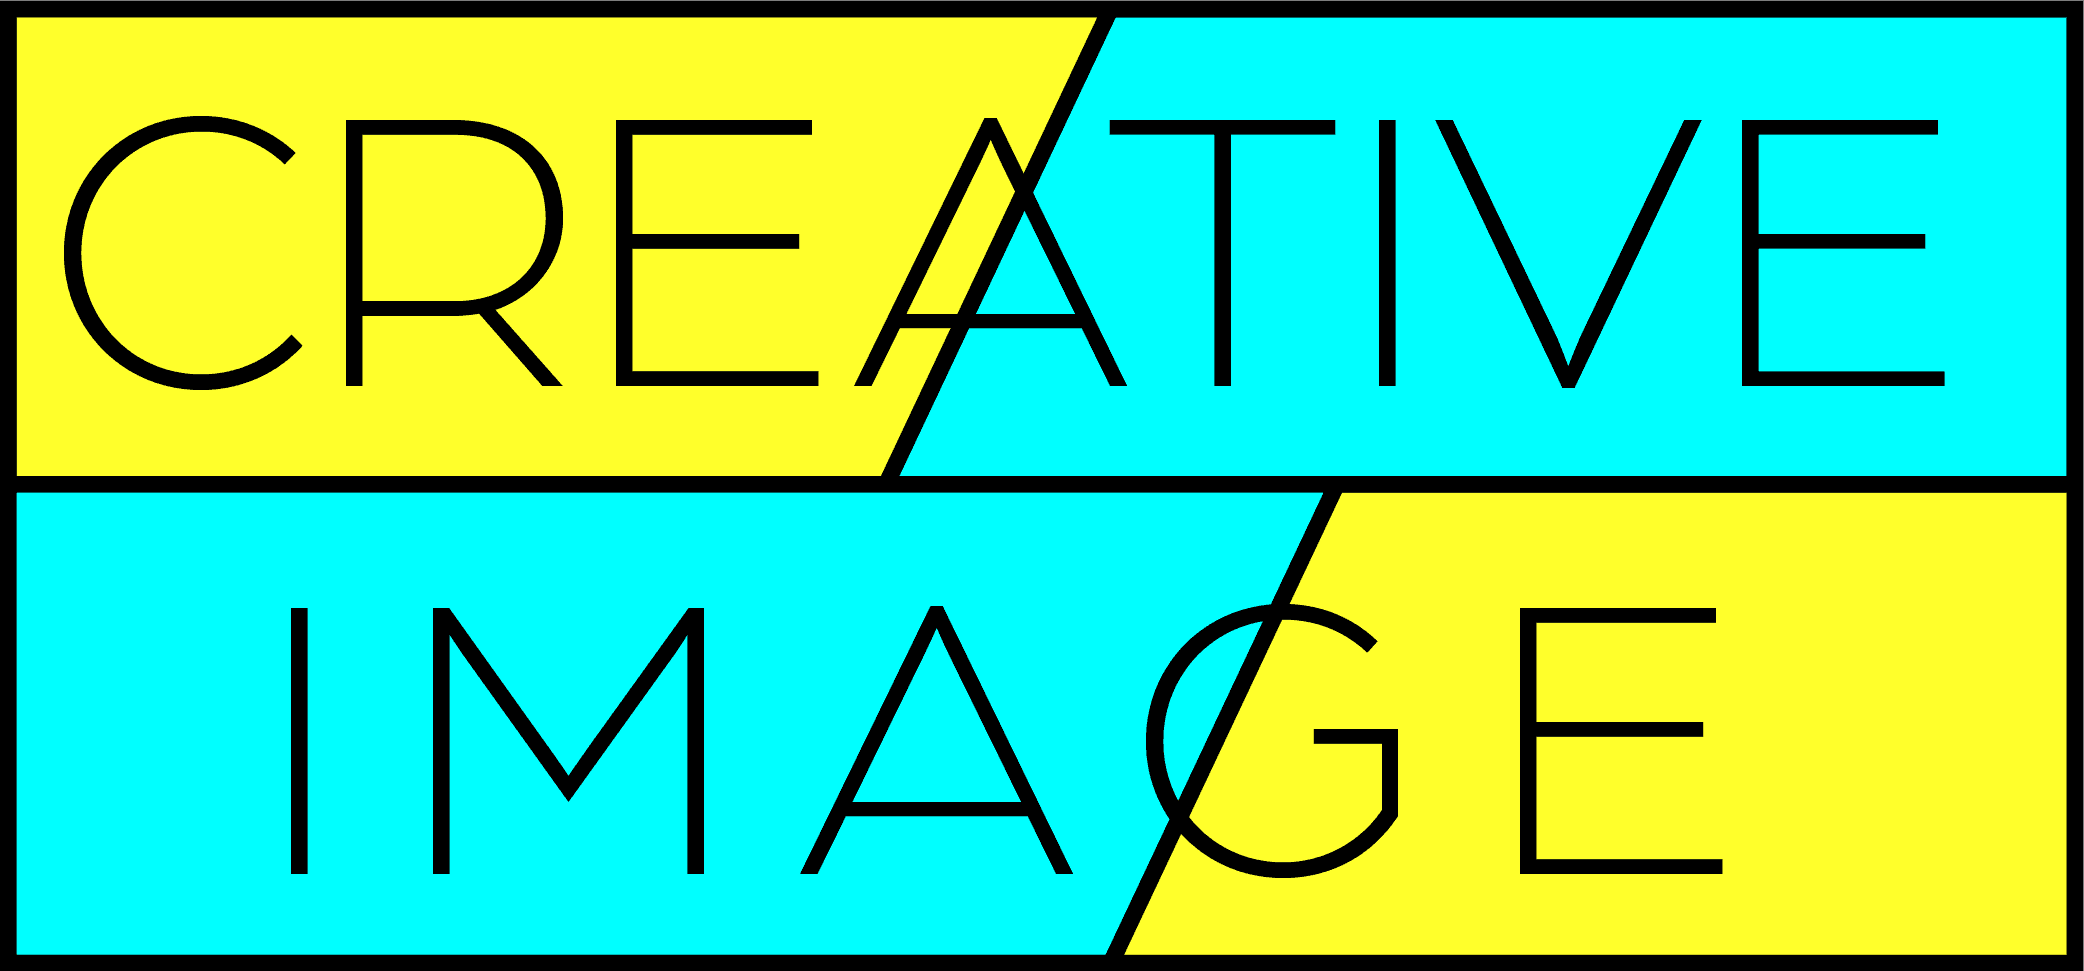 The Creative Image